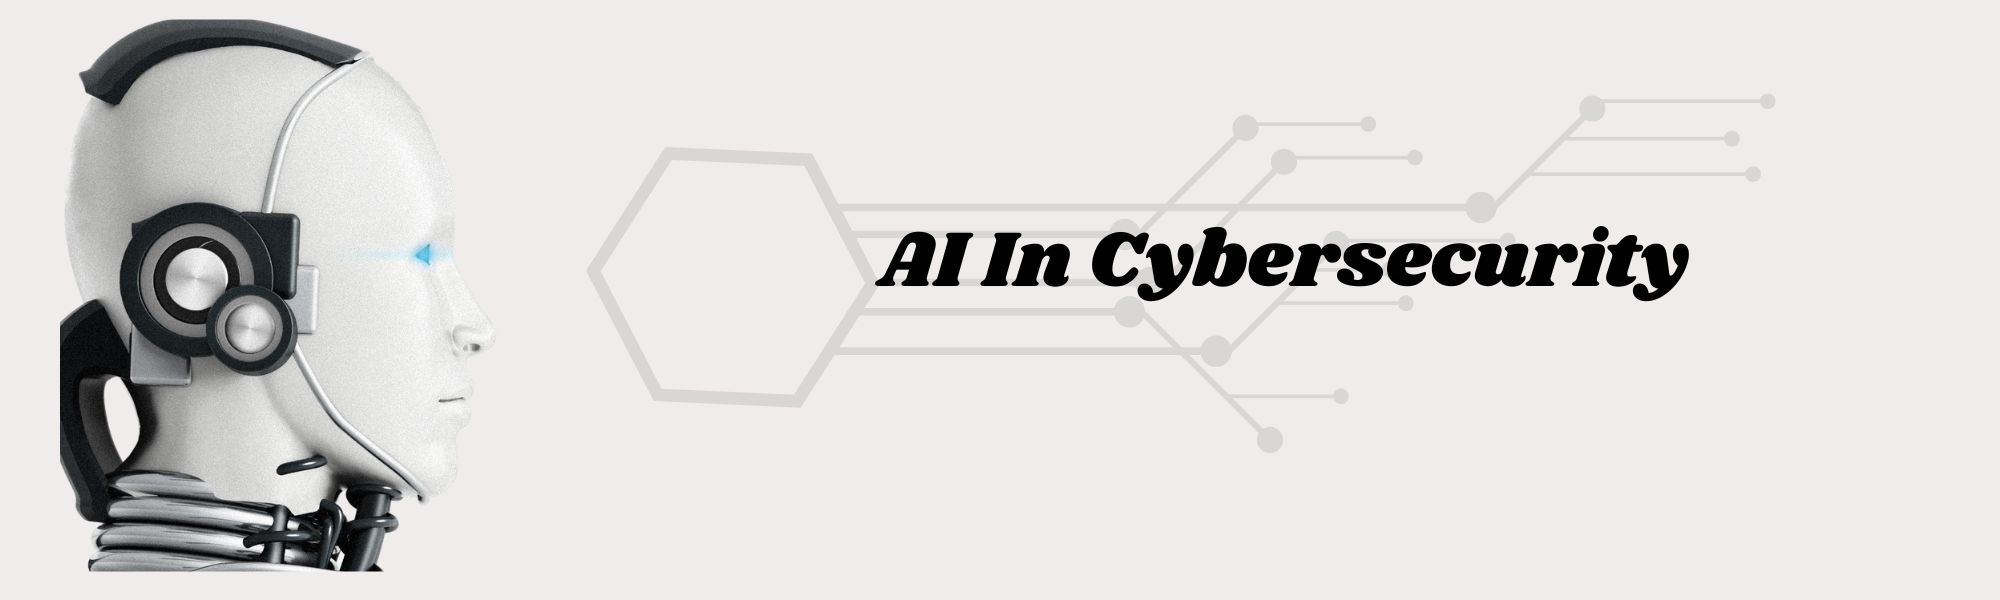 Cybersecurity-AI